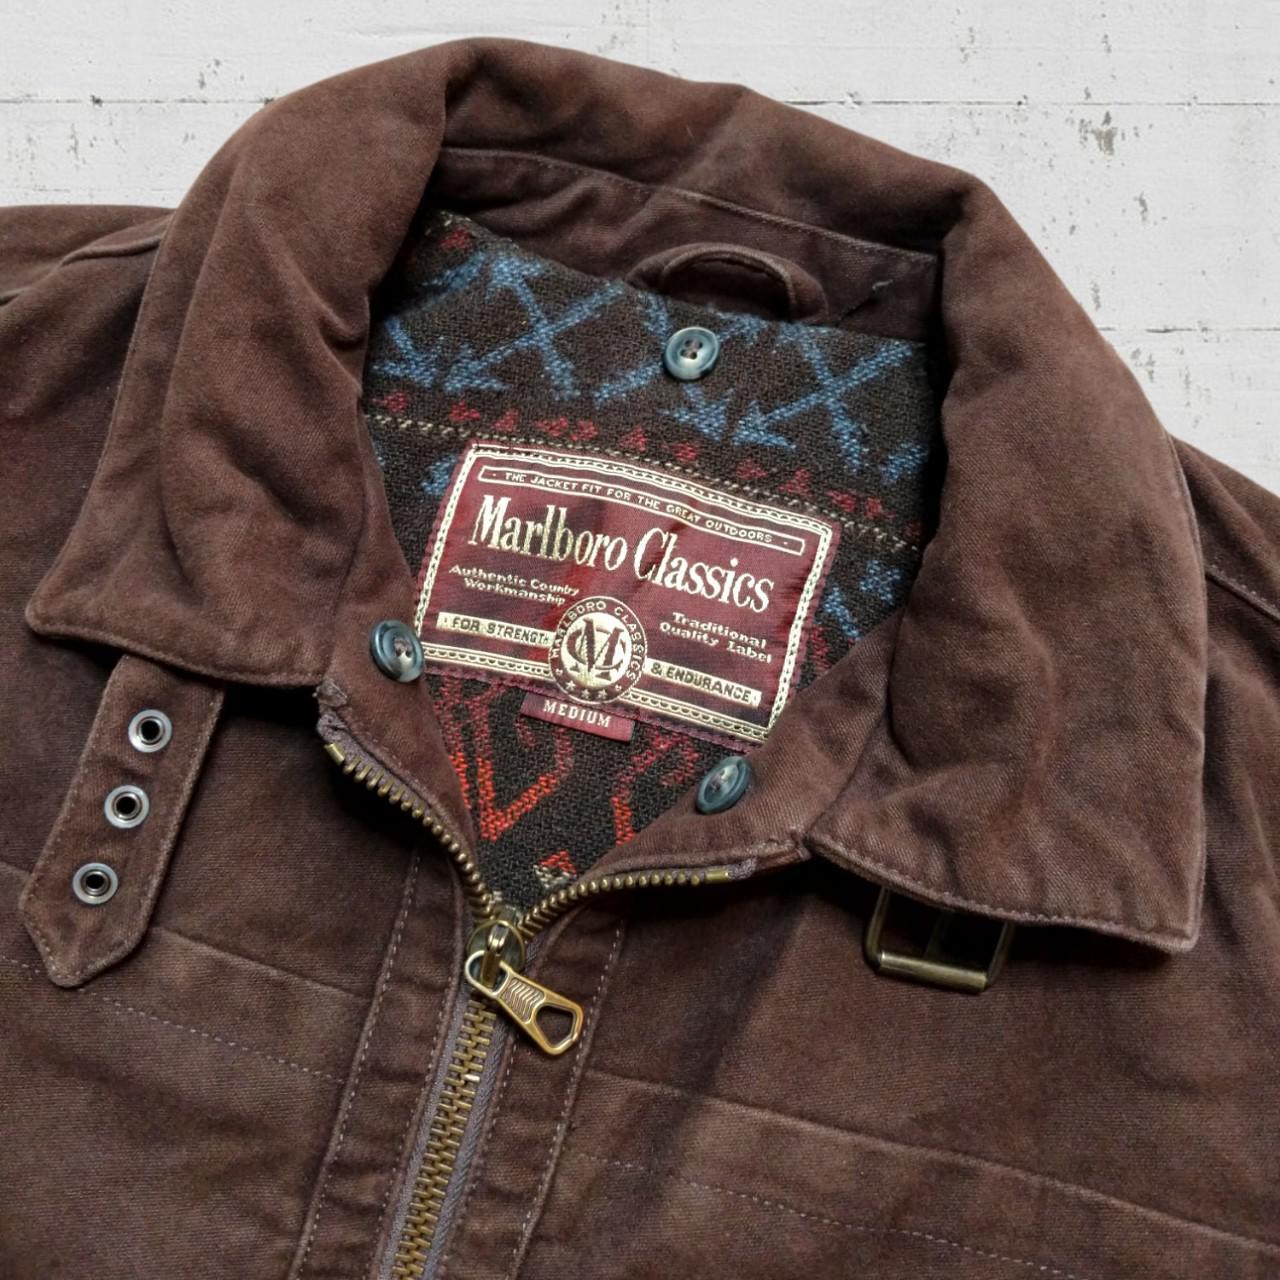 Product Image 2 - Vintage Marlboro Western Jacket

Really good